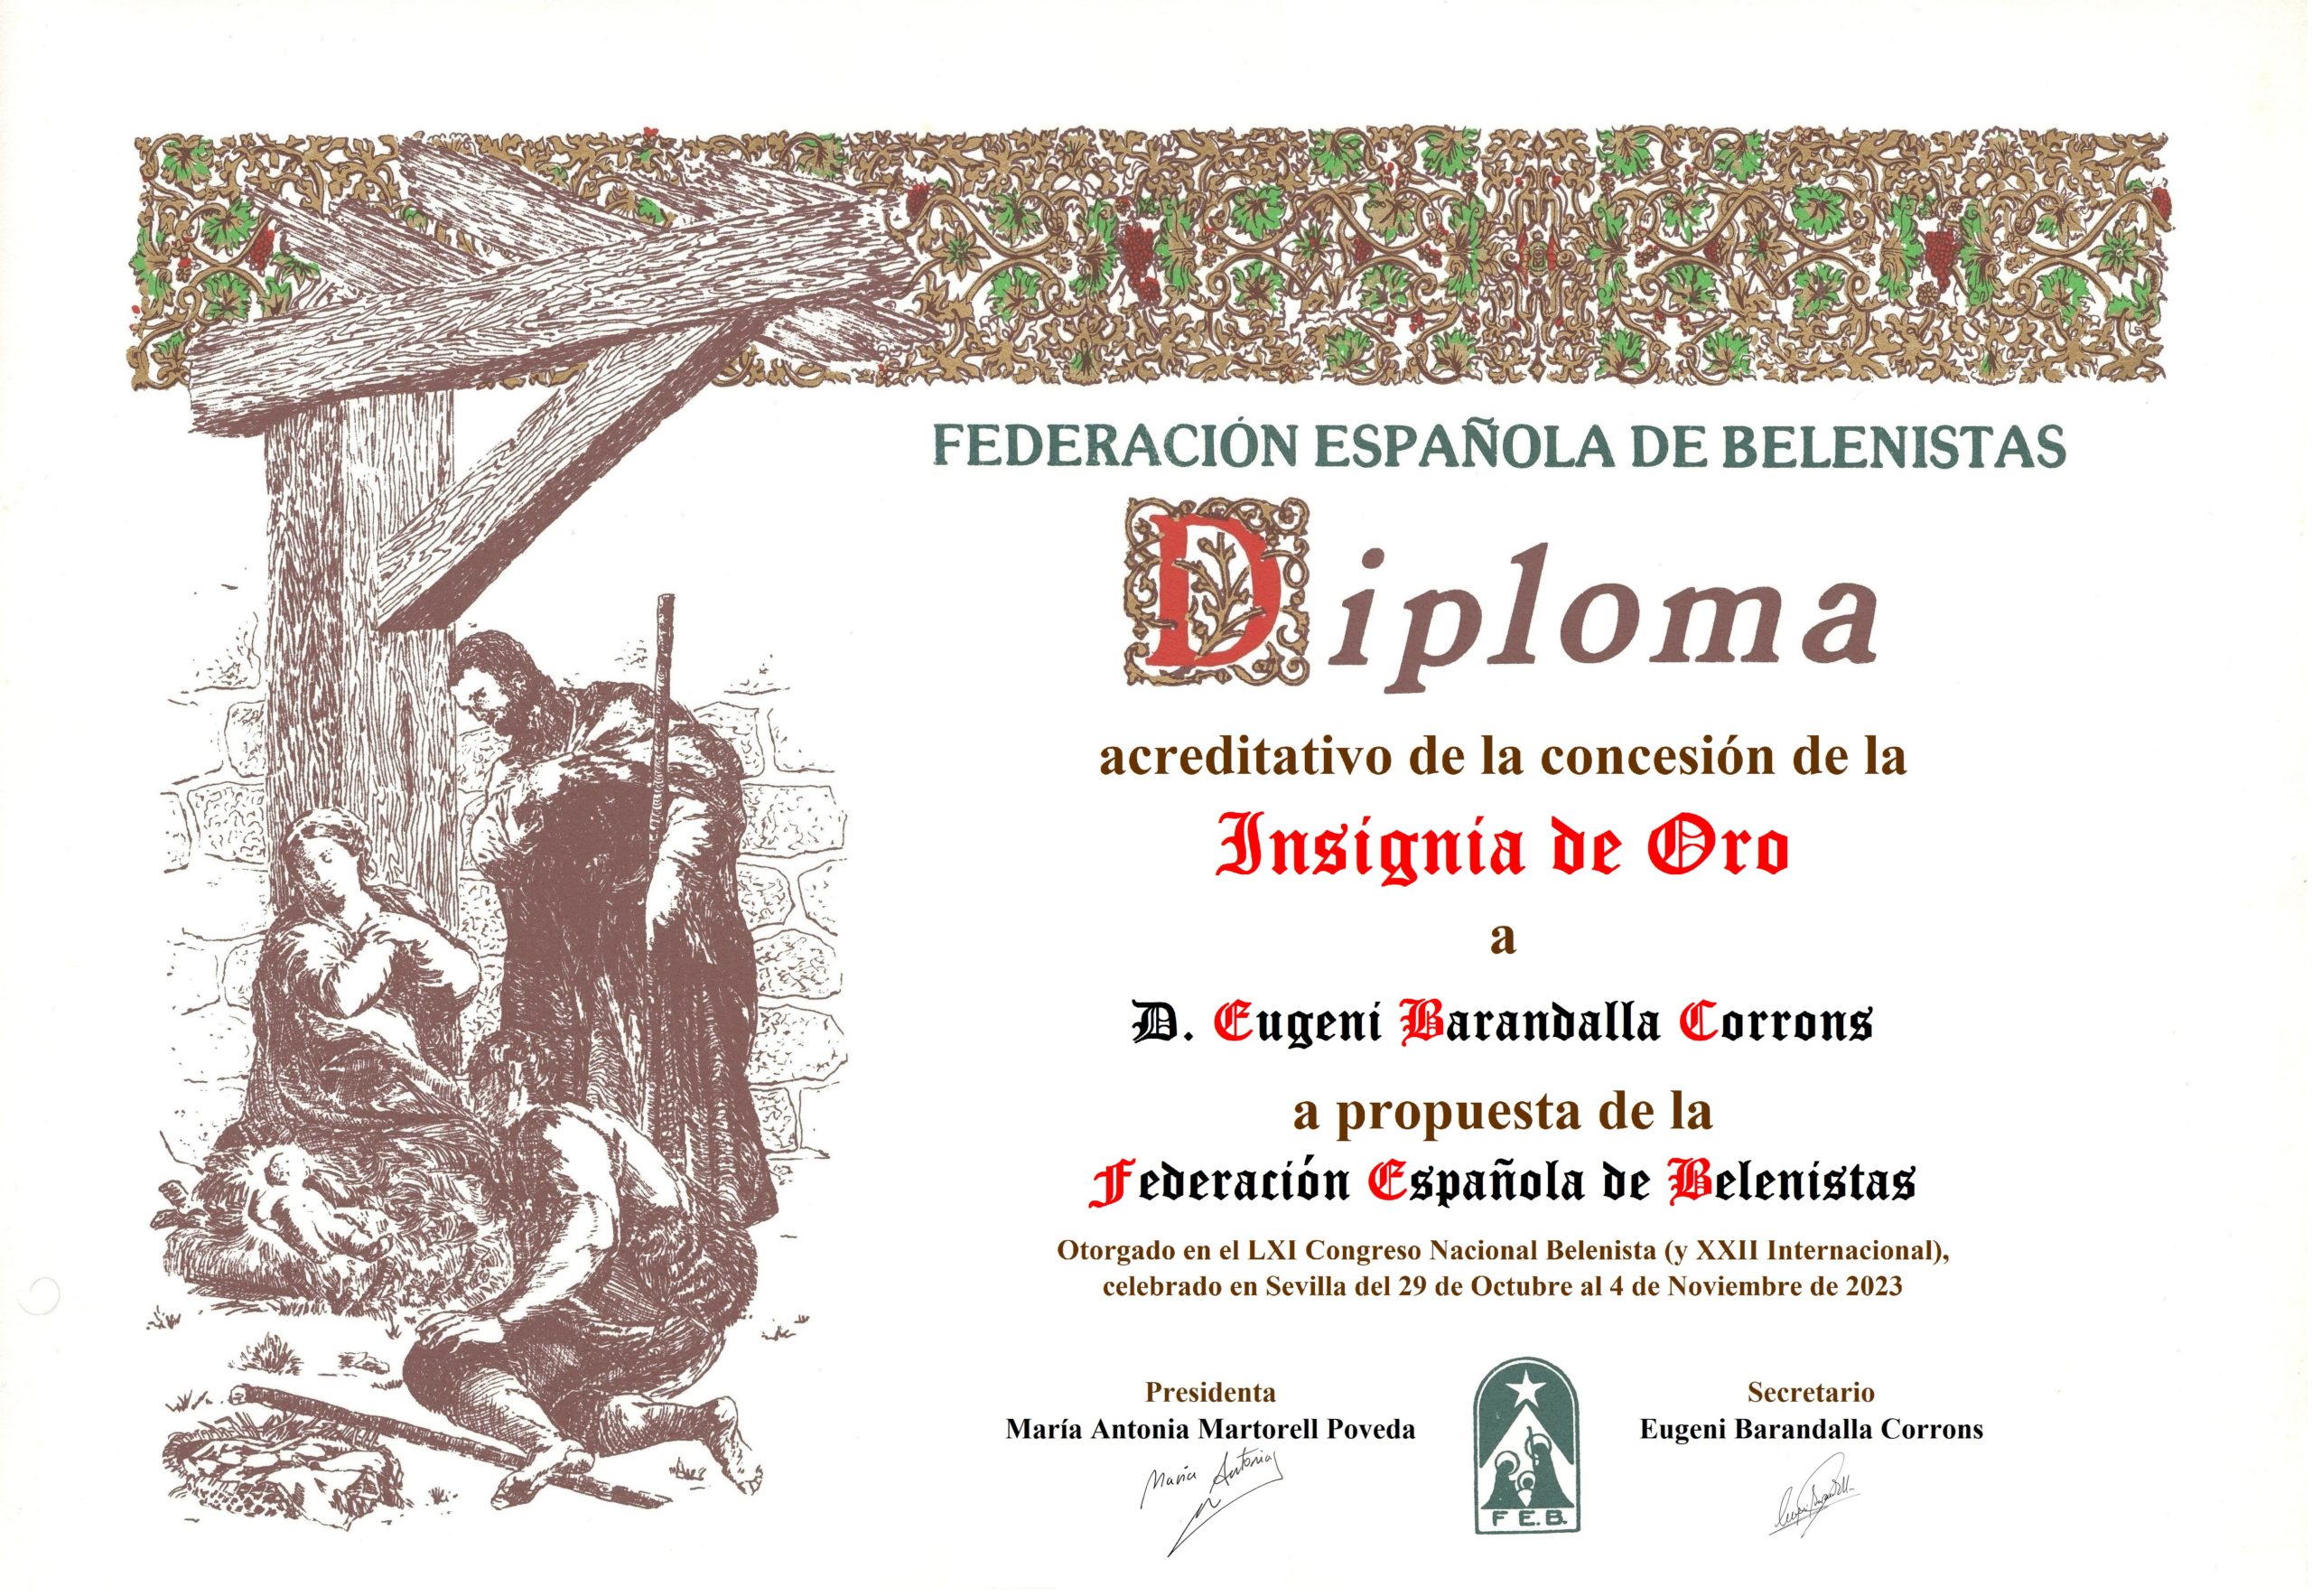 Eugeni Barandalla Corrons - Título/Diploma Insignia de Oro FEB 2023